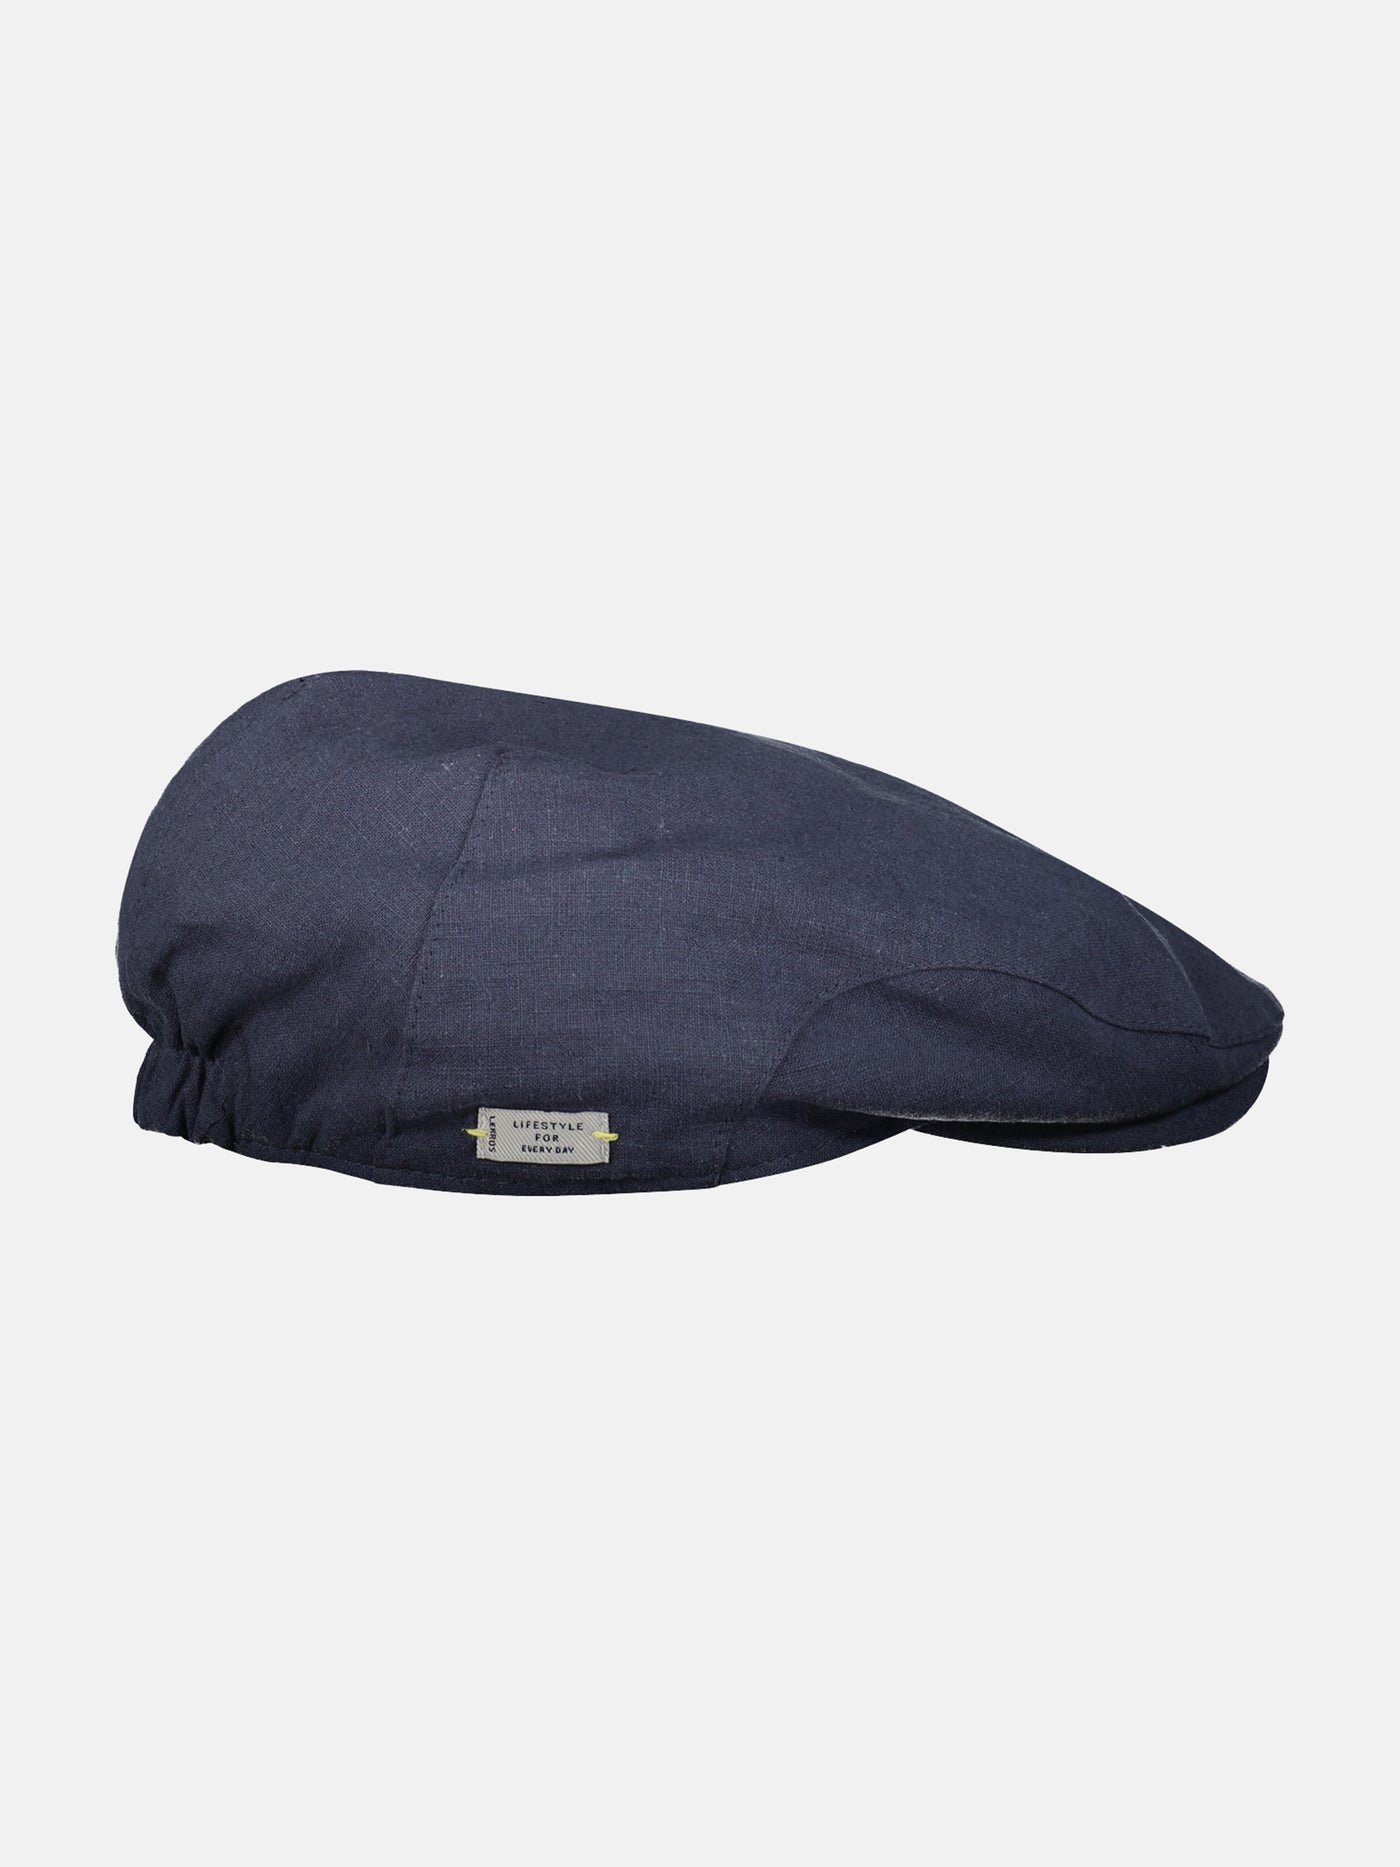 Flat cap, linen